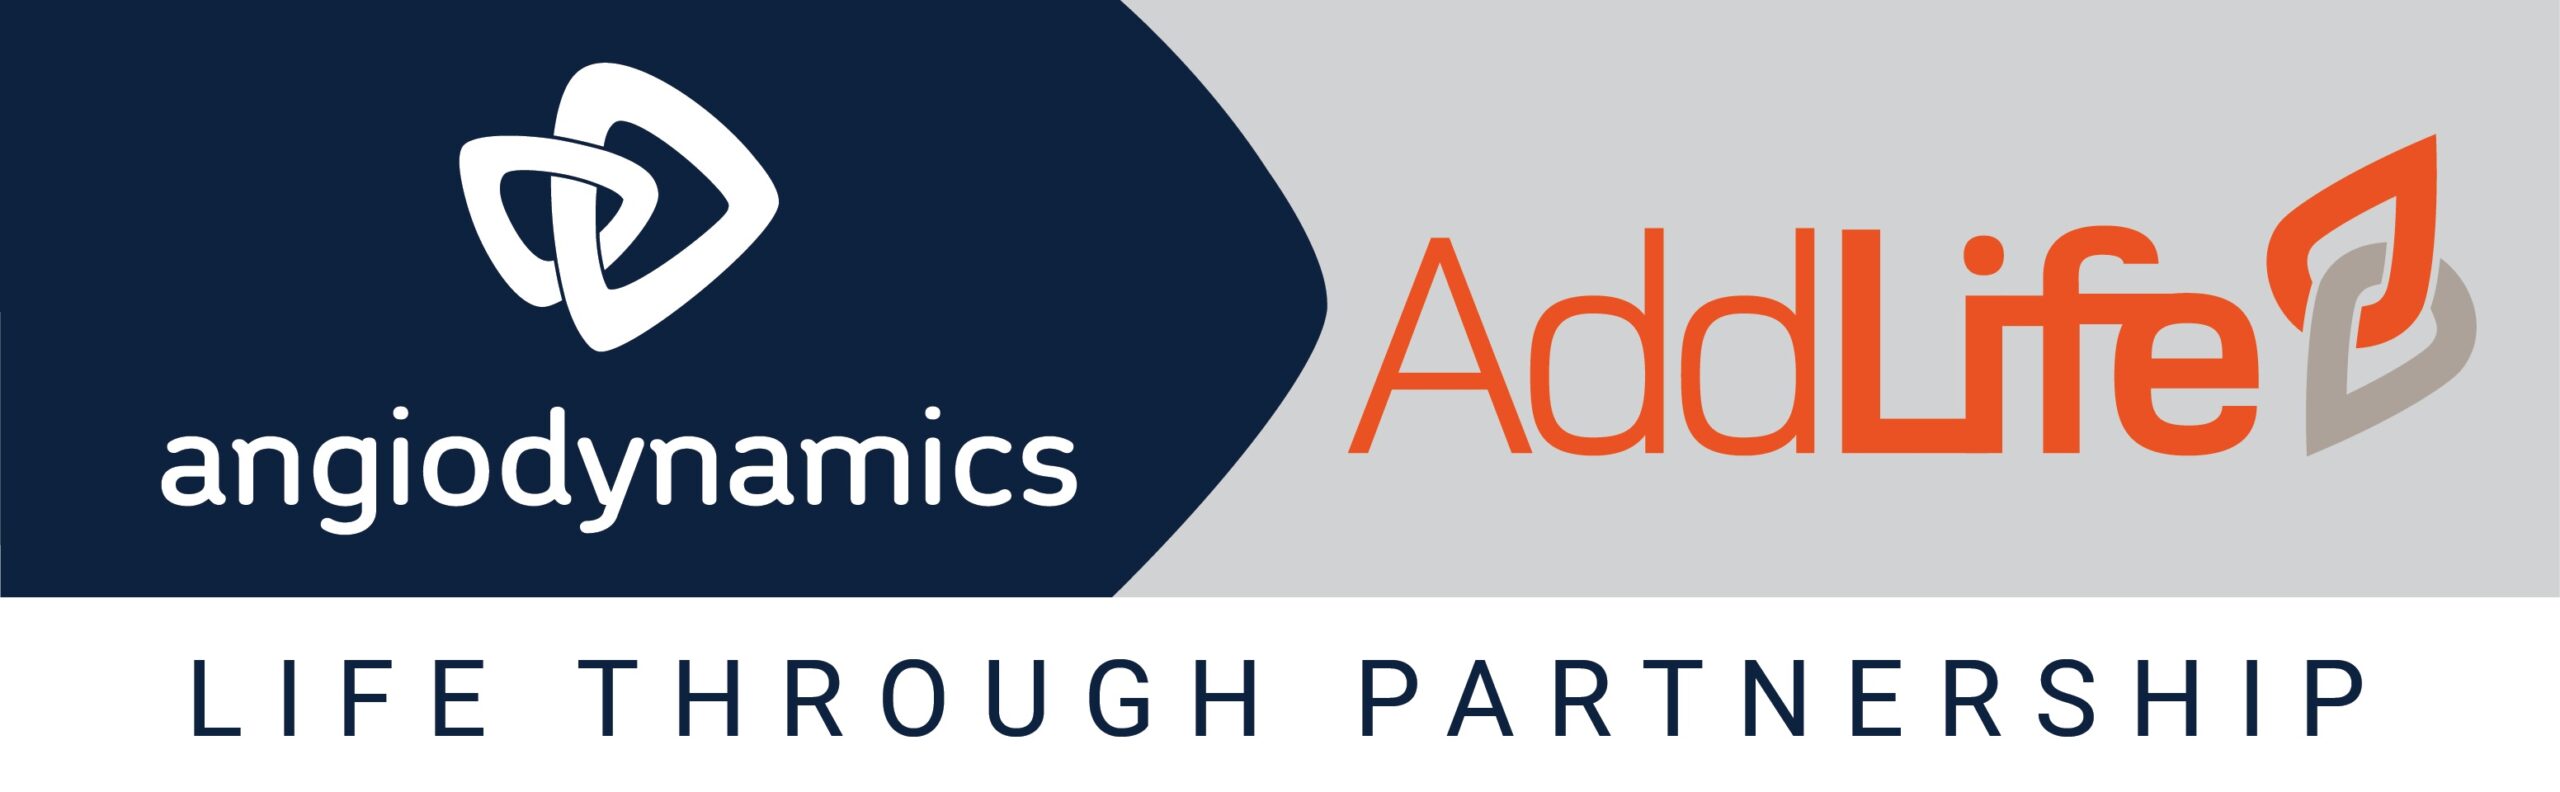 AngioDynamics and AddLife partnership